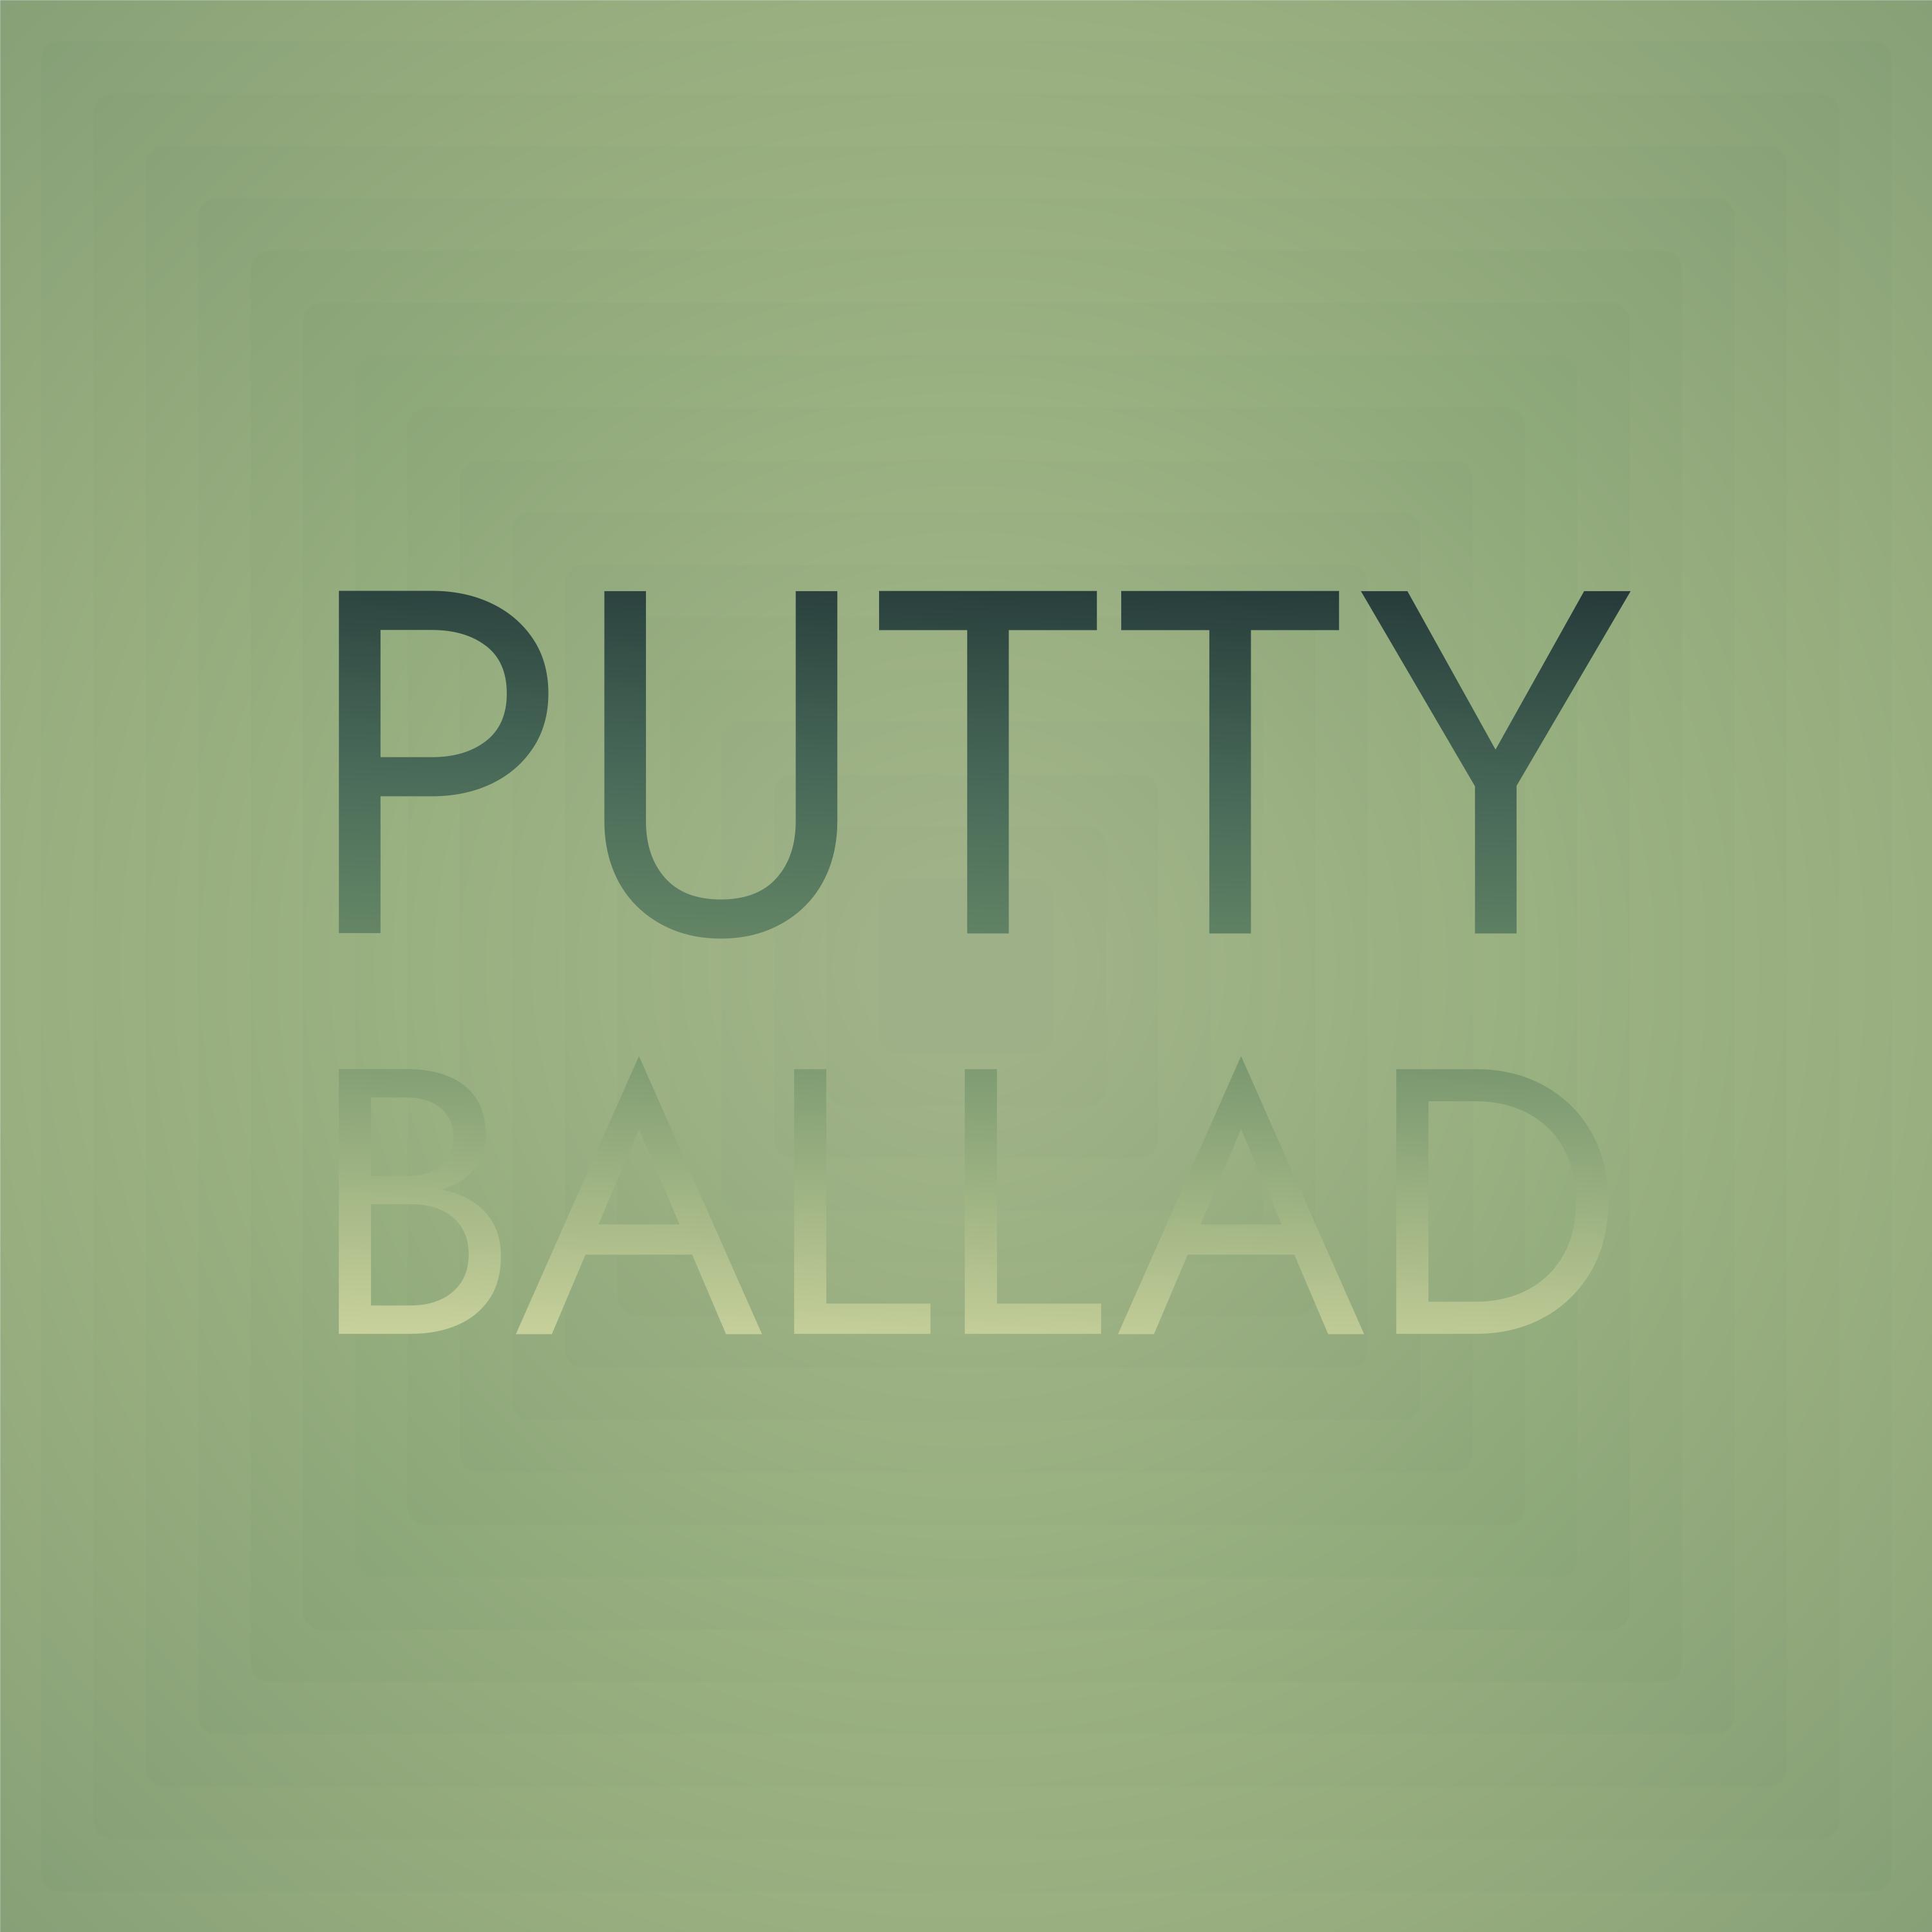 Dhea Paan - Putty Ballad